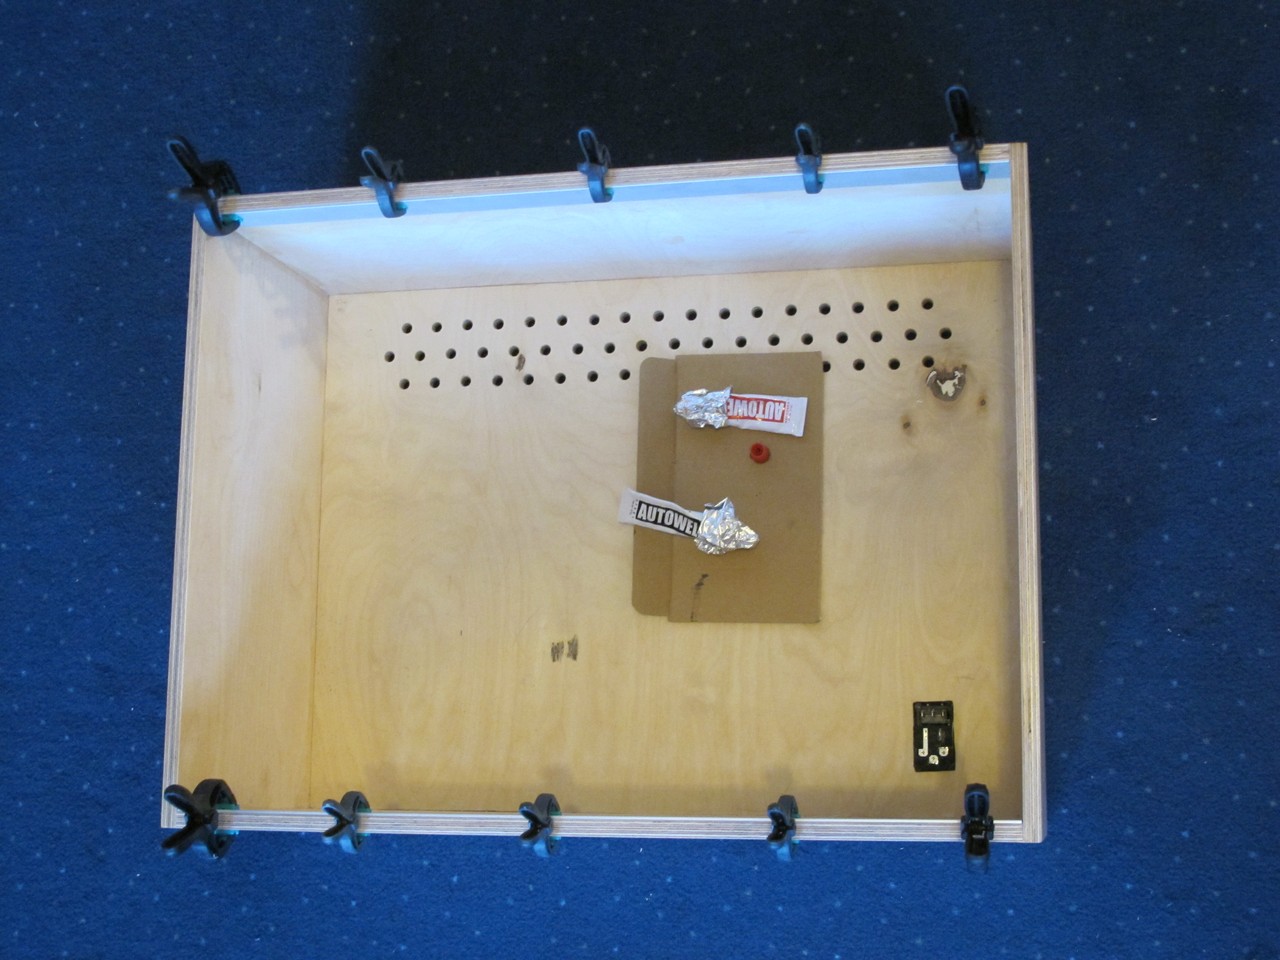 Glueing aluminium profile to wooden box